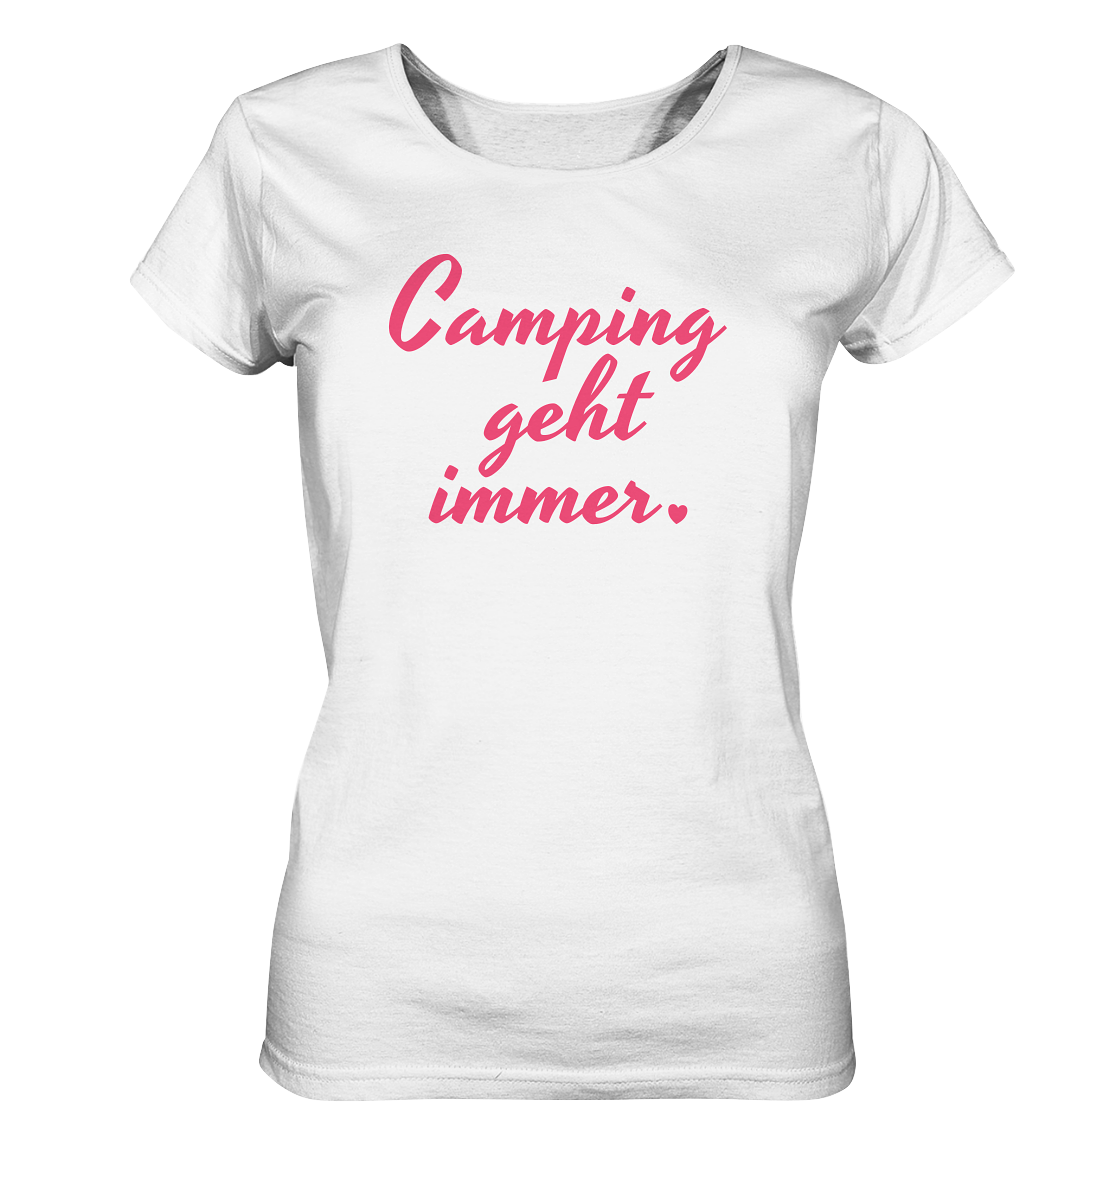 Camping geht immer - Ladies Organic Shirt